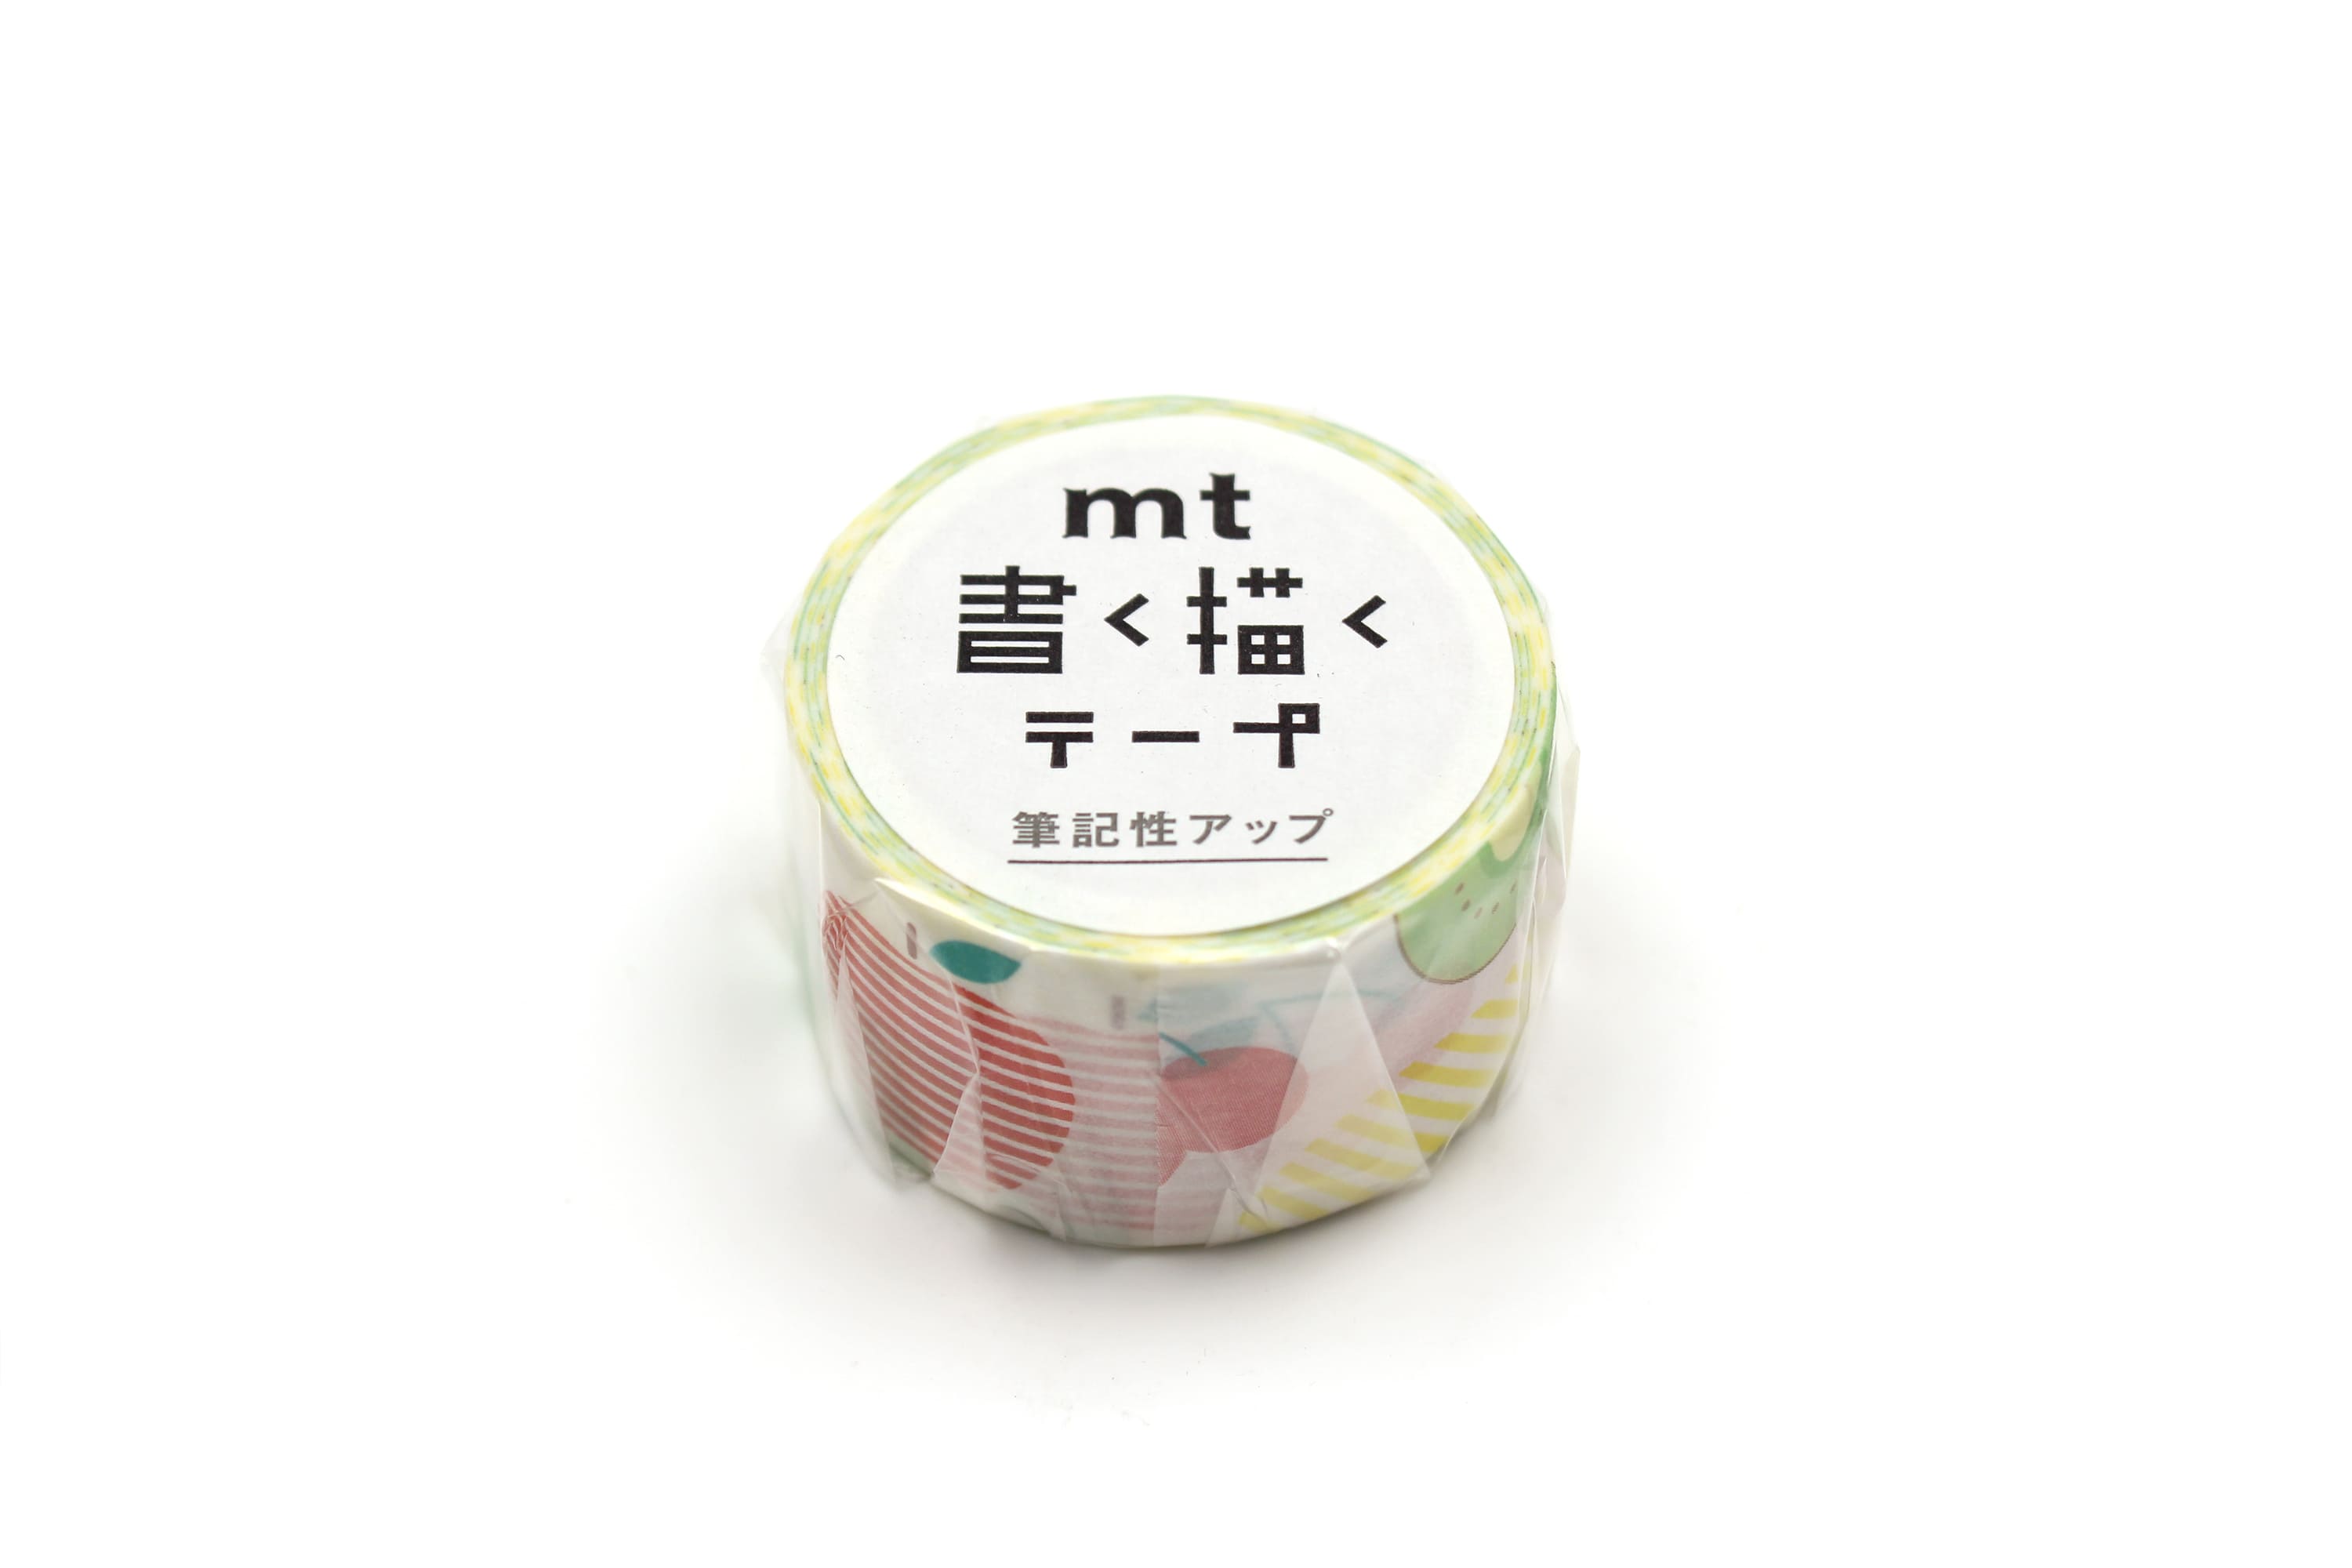 mt fab - Seasonal Fruits - 20mm Washi Tape